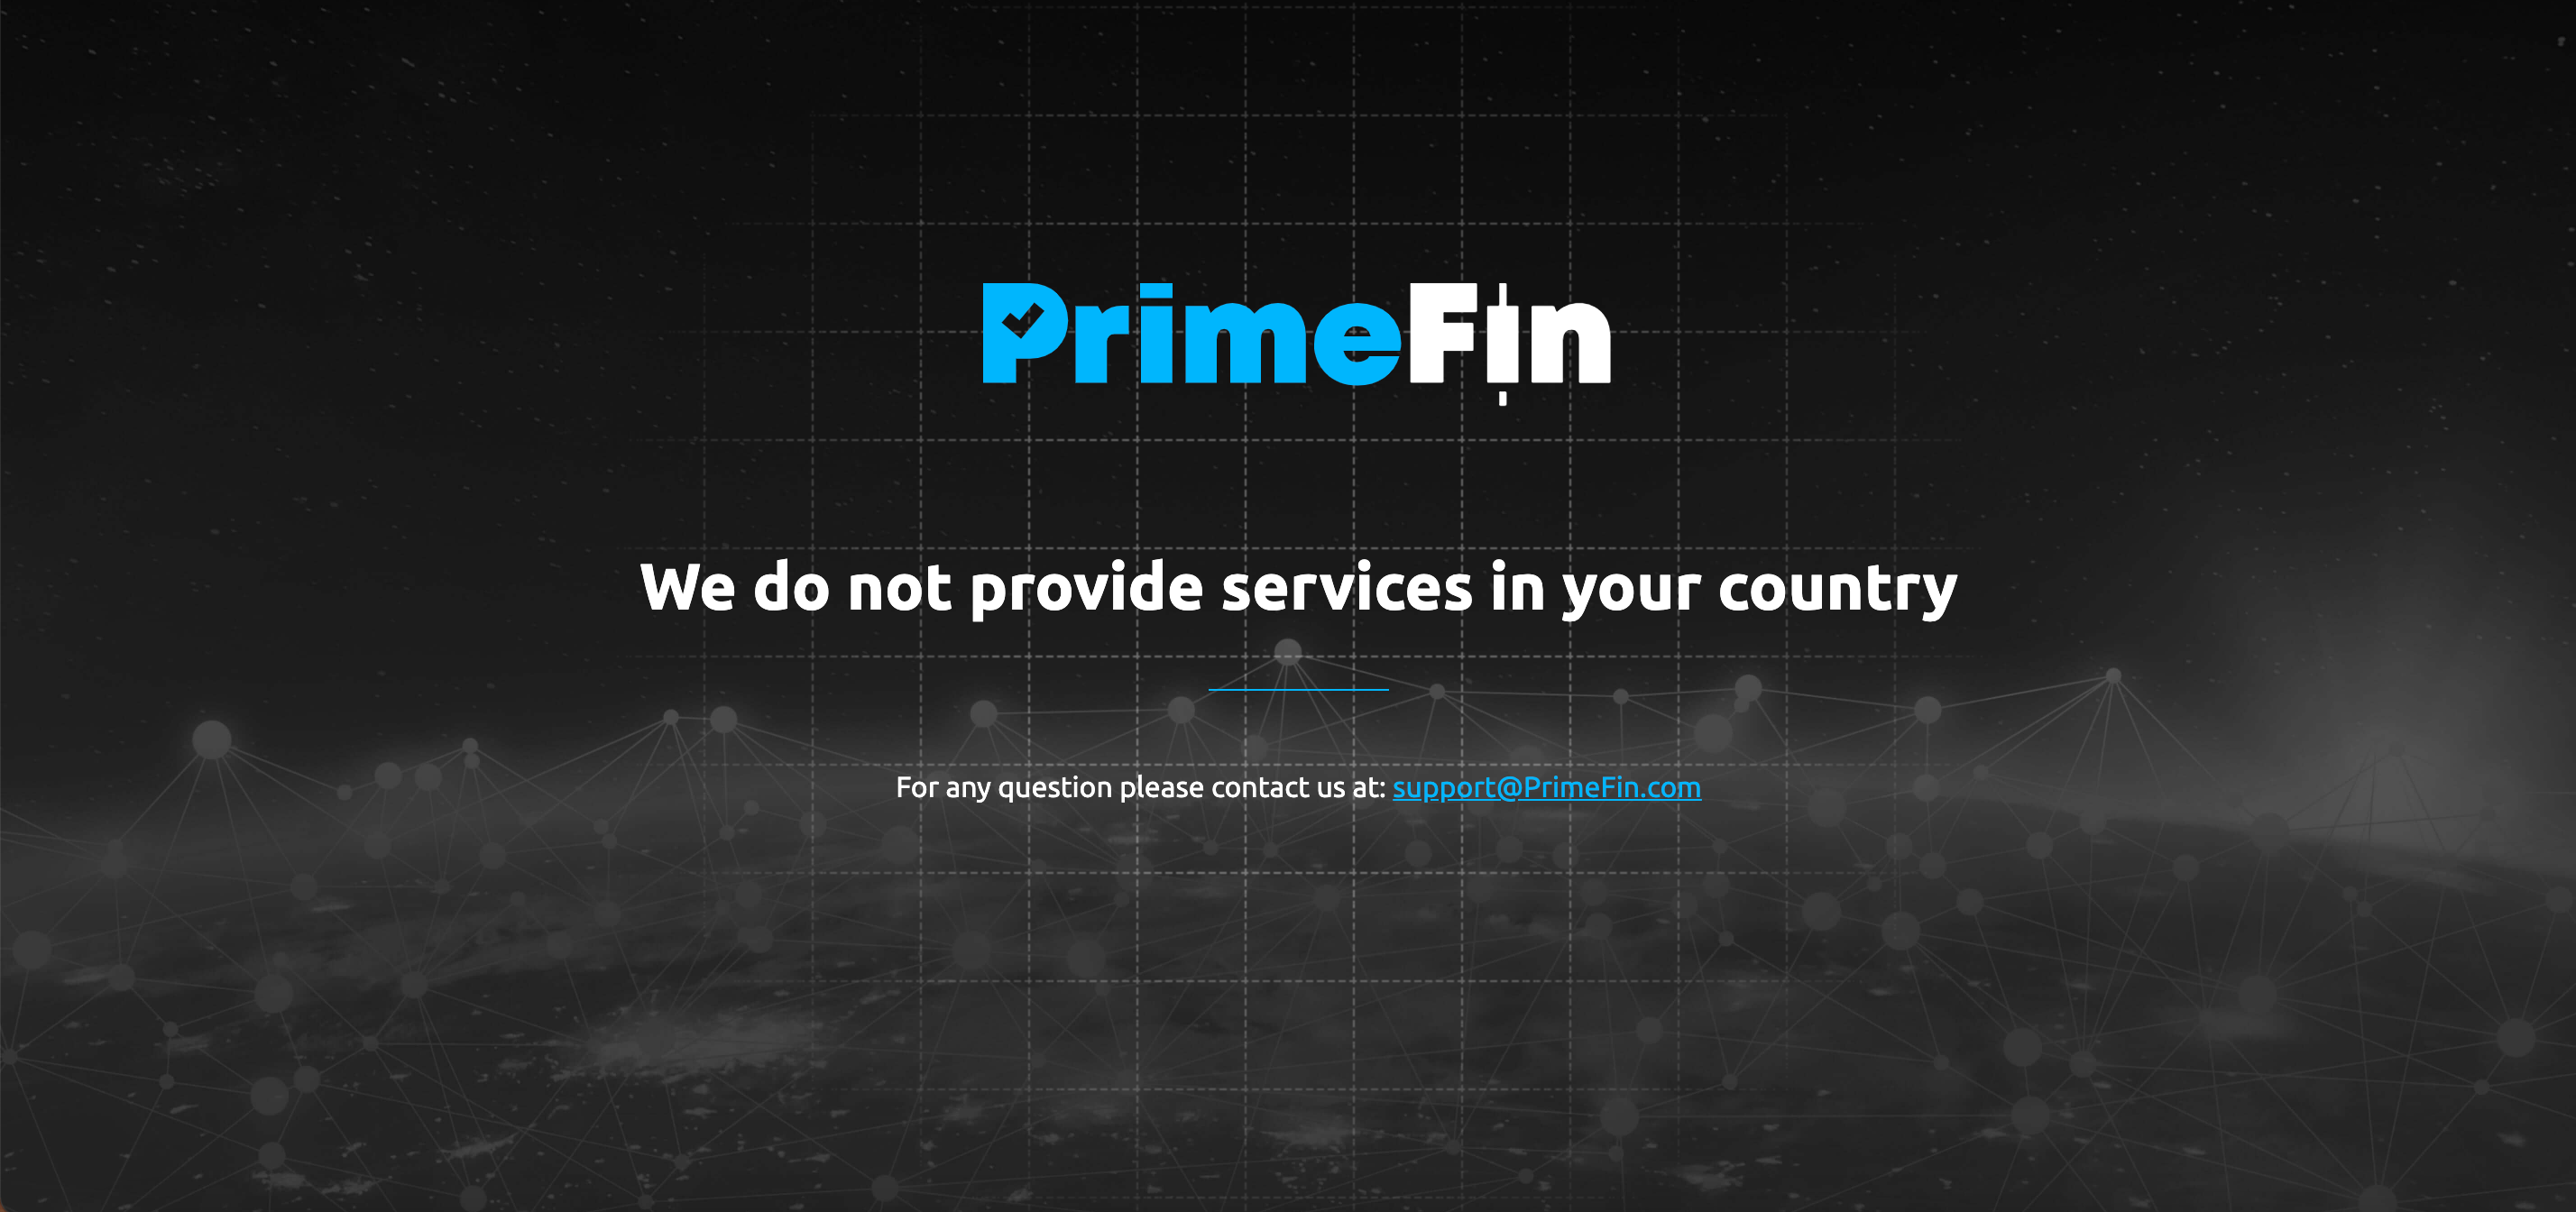 Prime Fin website